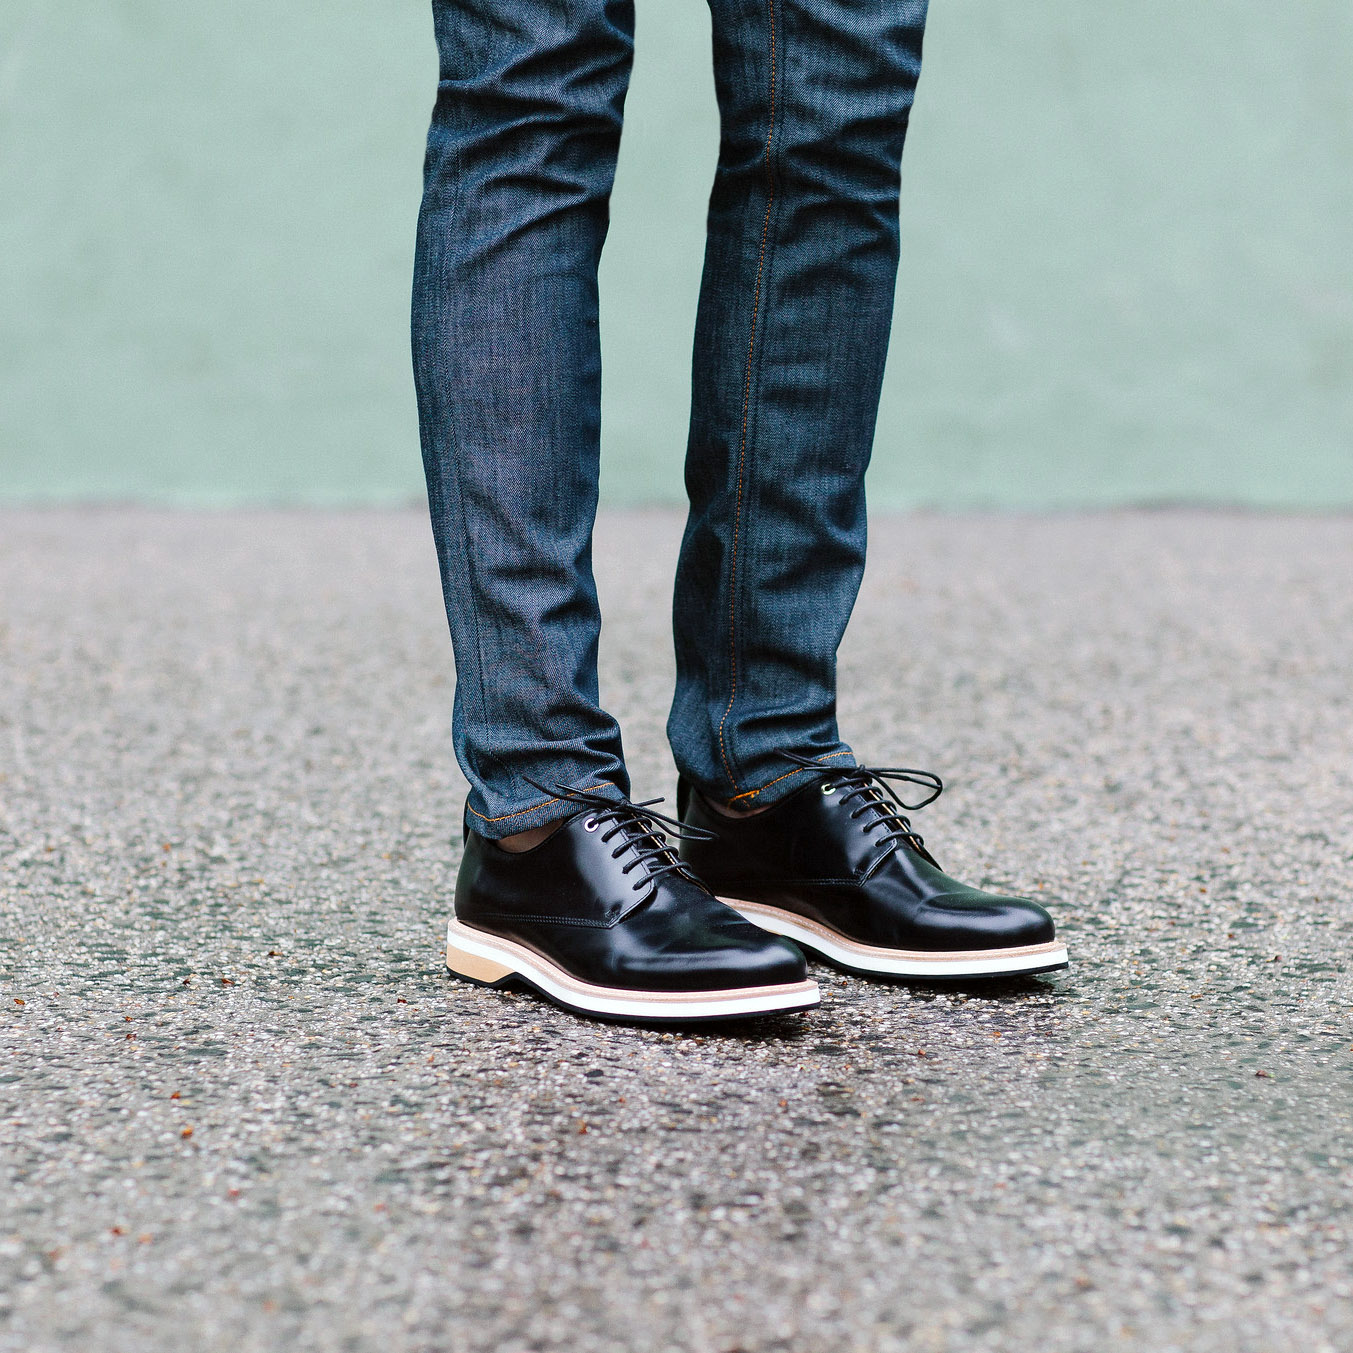 mens-black-leather-shoes